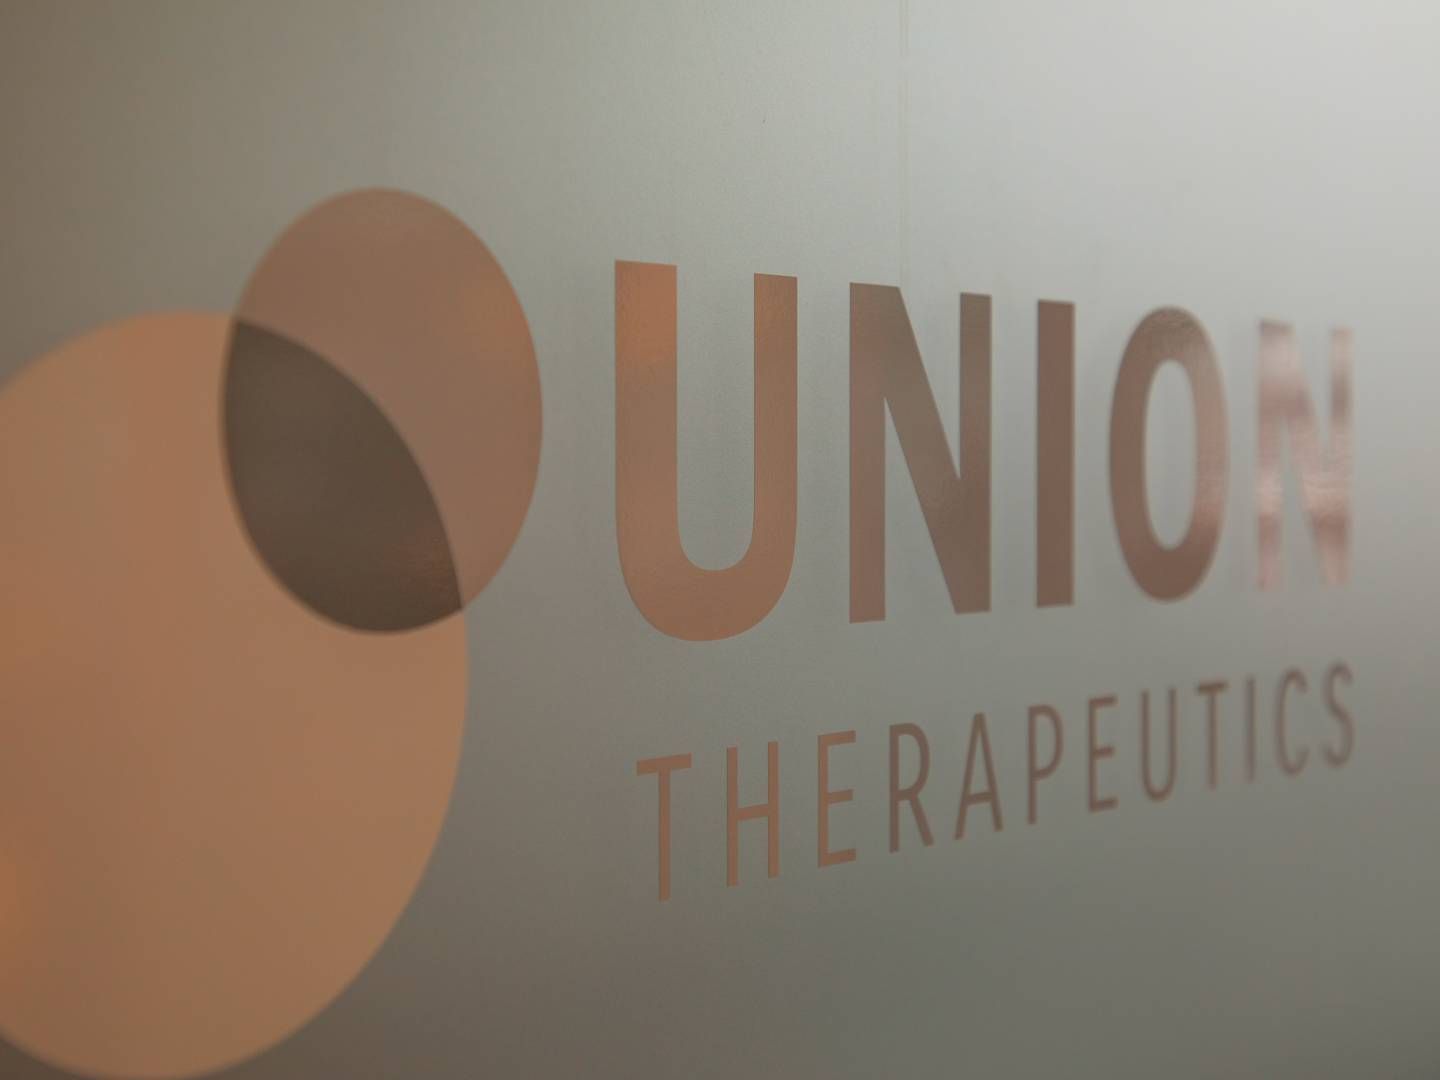 Photo: Union Therapeutics / Pr